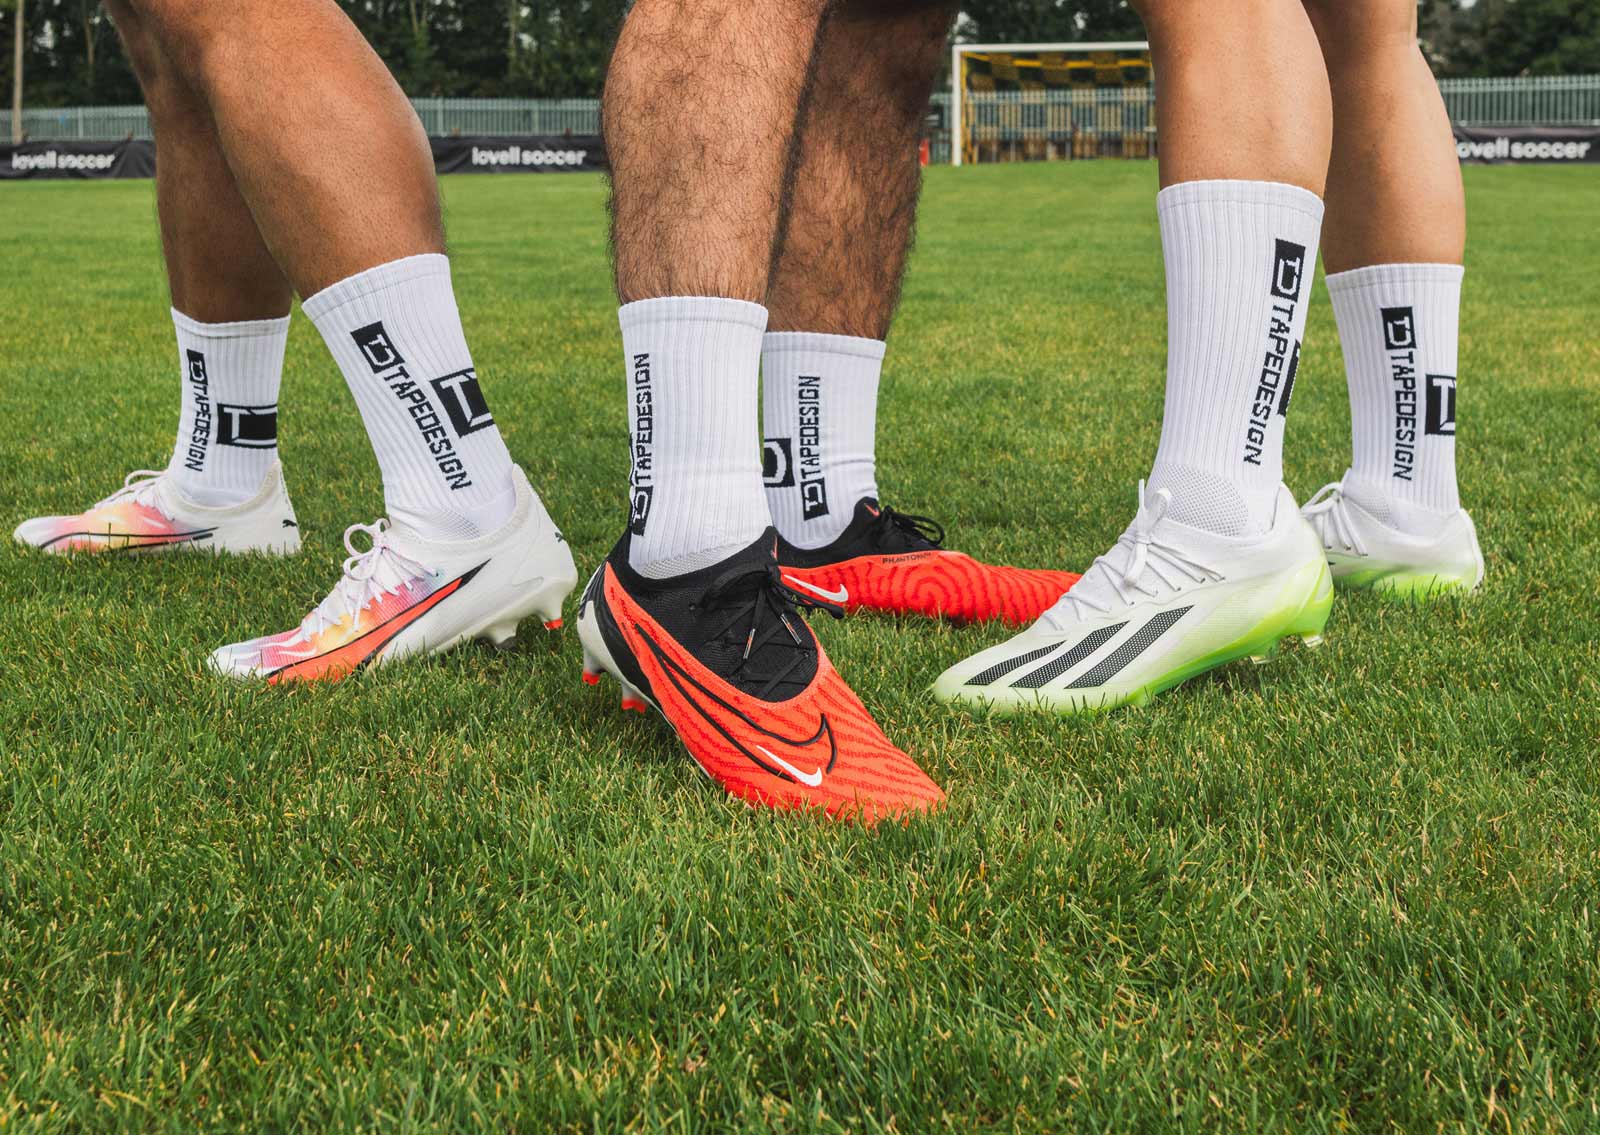 Lovell Soccer – Football Boots, Shirts, Training